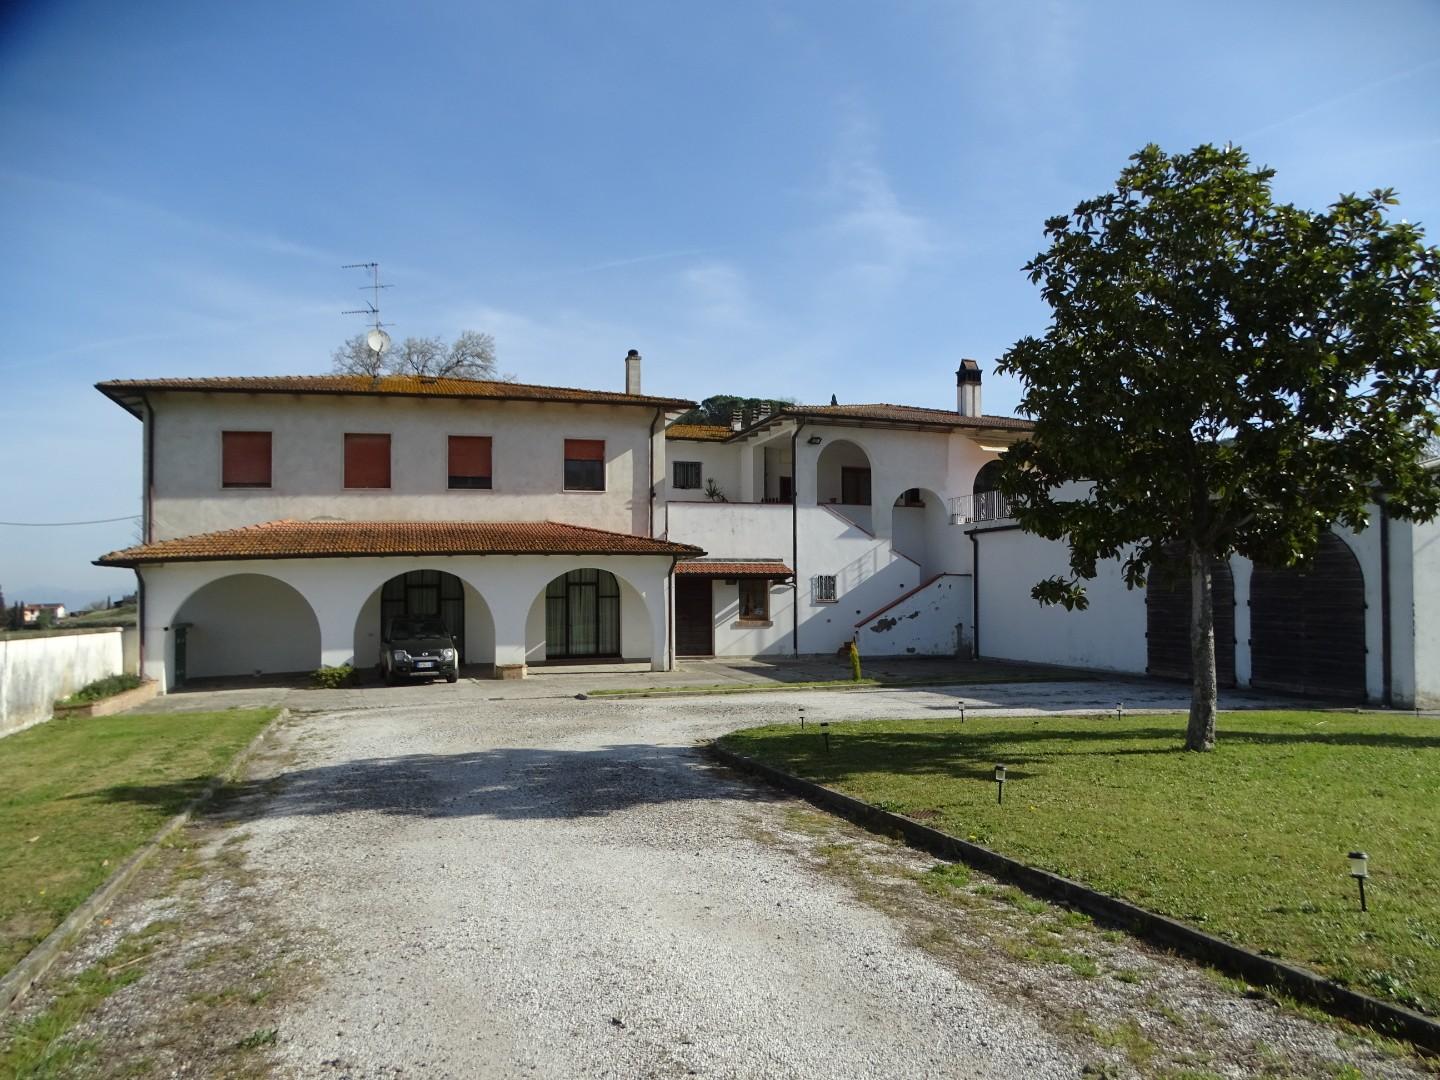 villa in MRFJ+Q San Miniato PI, a San Miniato